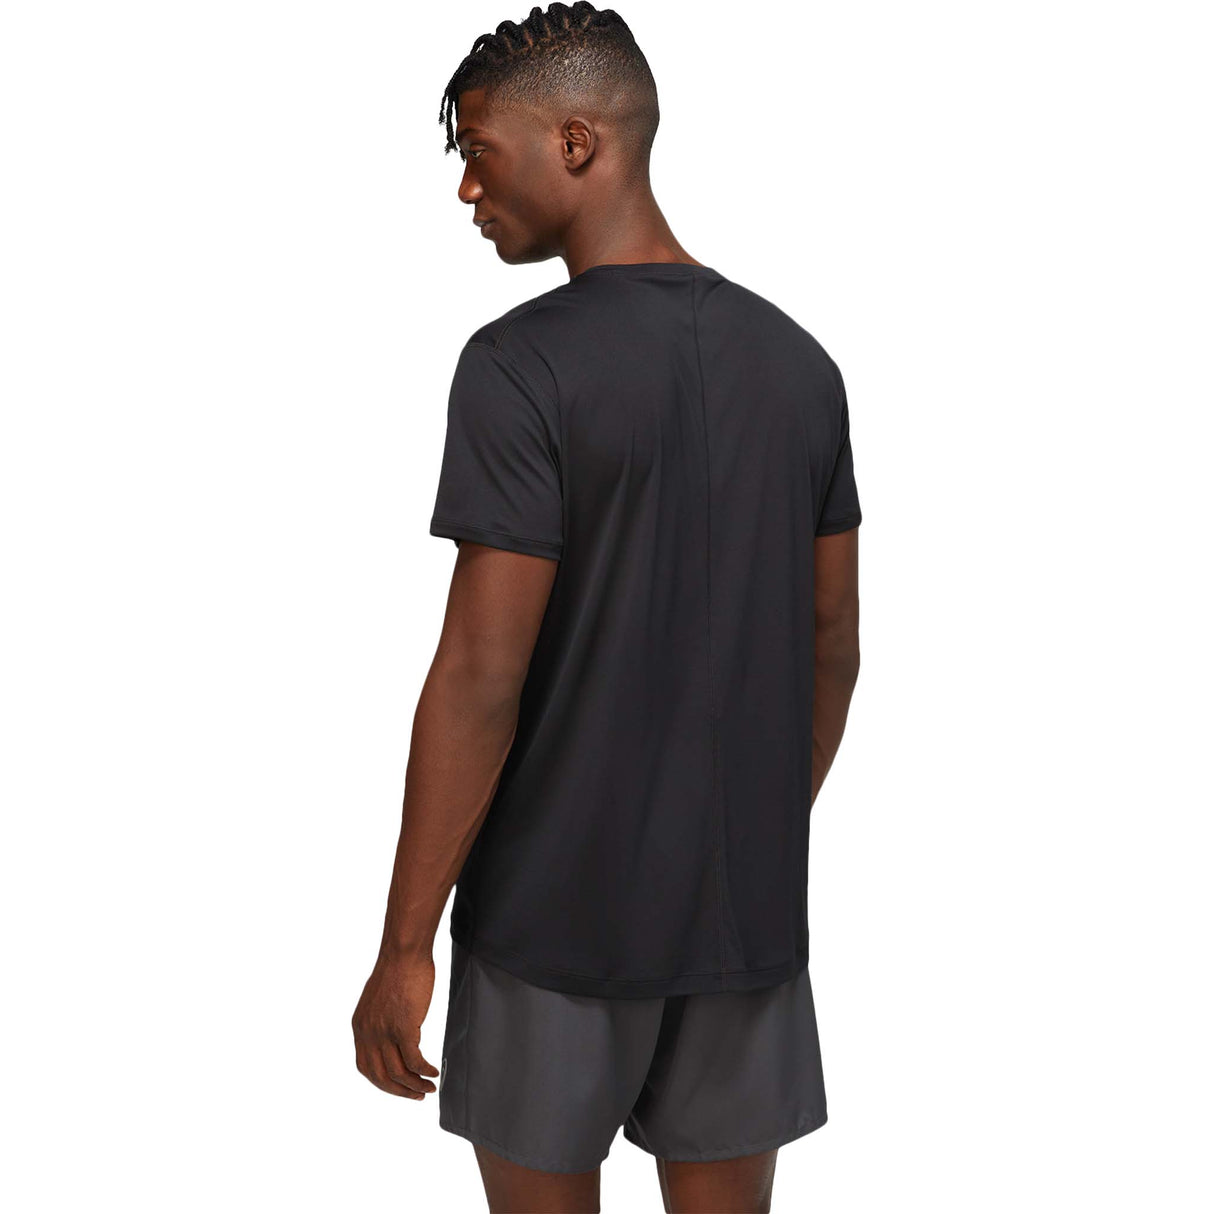 ASICS Silver T-shirt sport à manches courtes performance black carrier grey homme dos